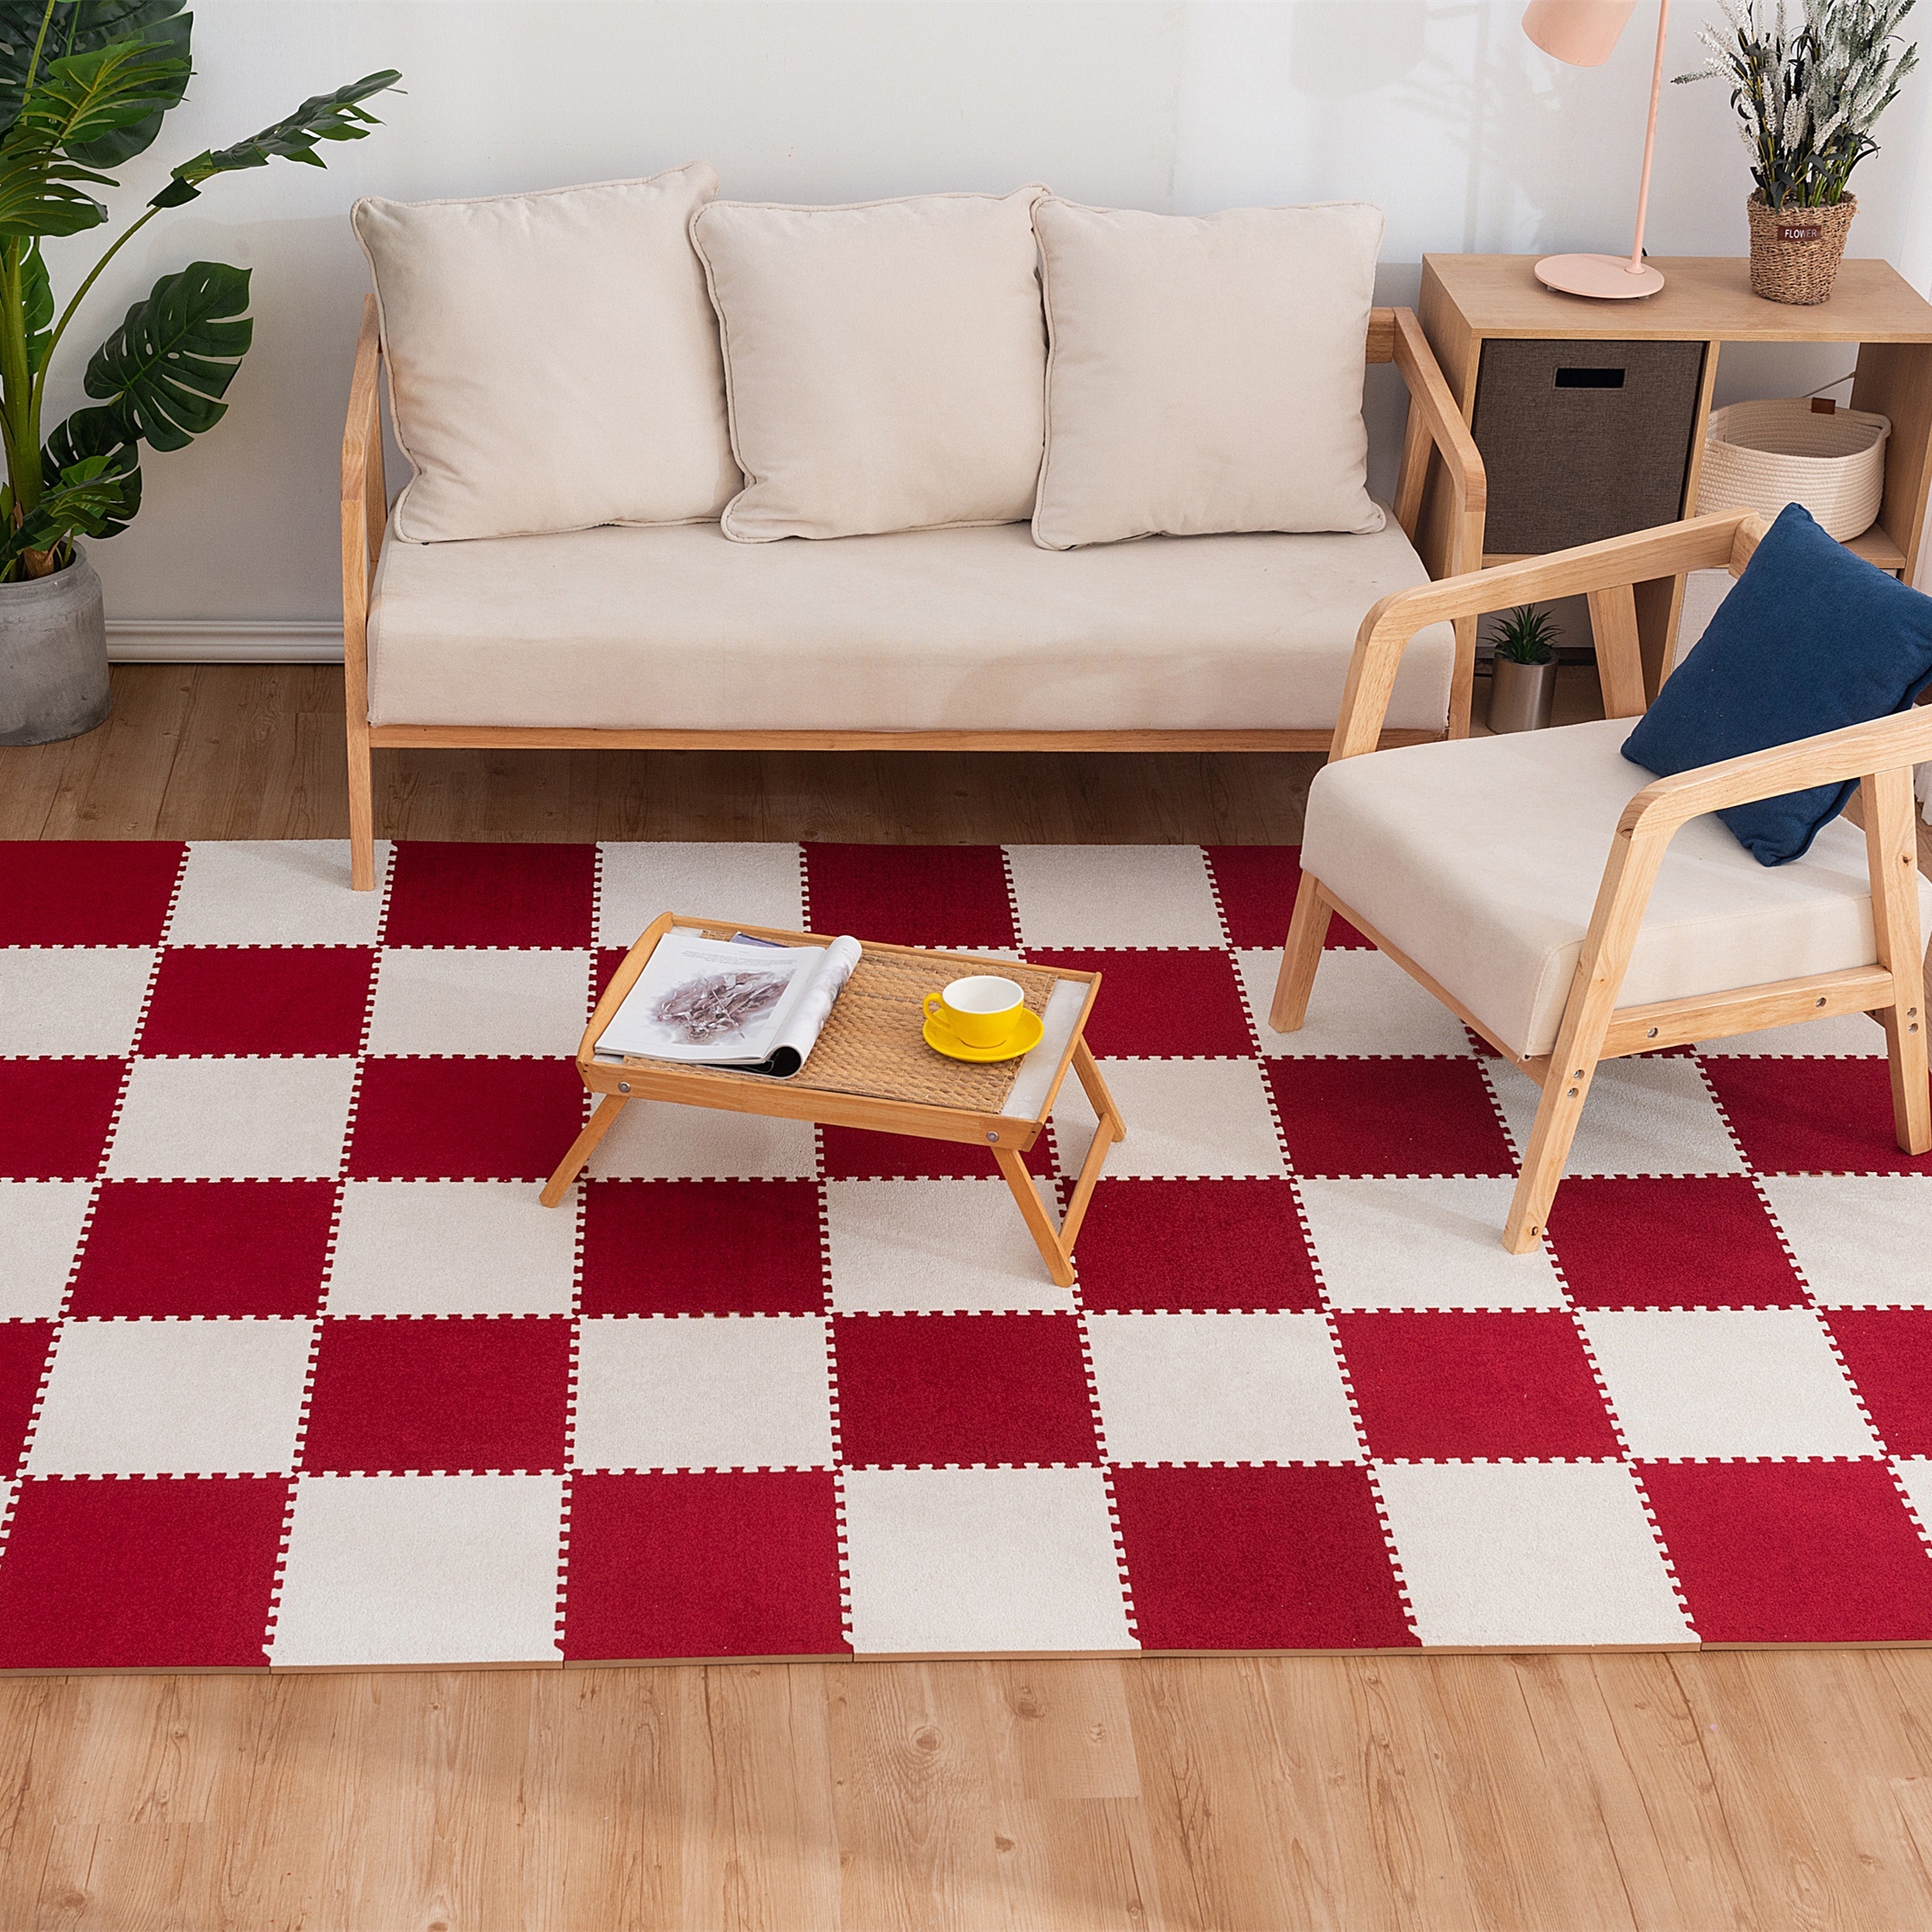 HoKiis 12 Pcs Soft Puzzle Play Mat Rug,Plush Carpet Squares,Interlocking  Foam Tiles,Plush Puzzle Foam Floor,for Living Room,Decor,1x1